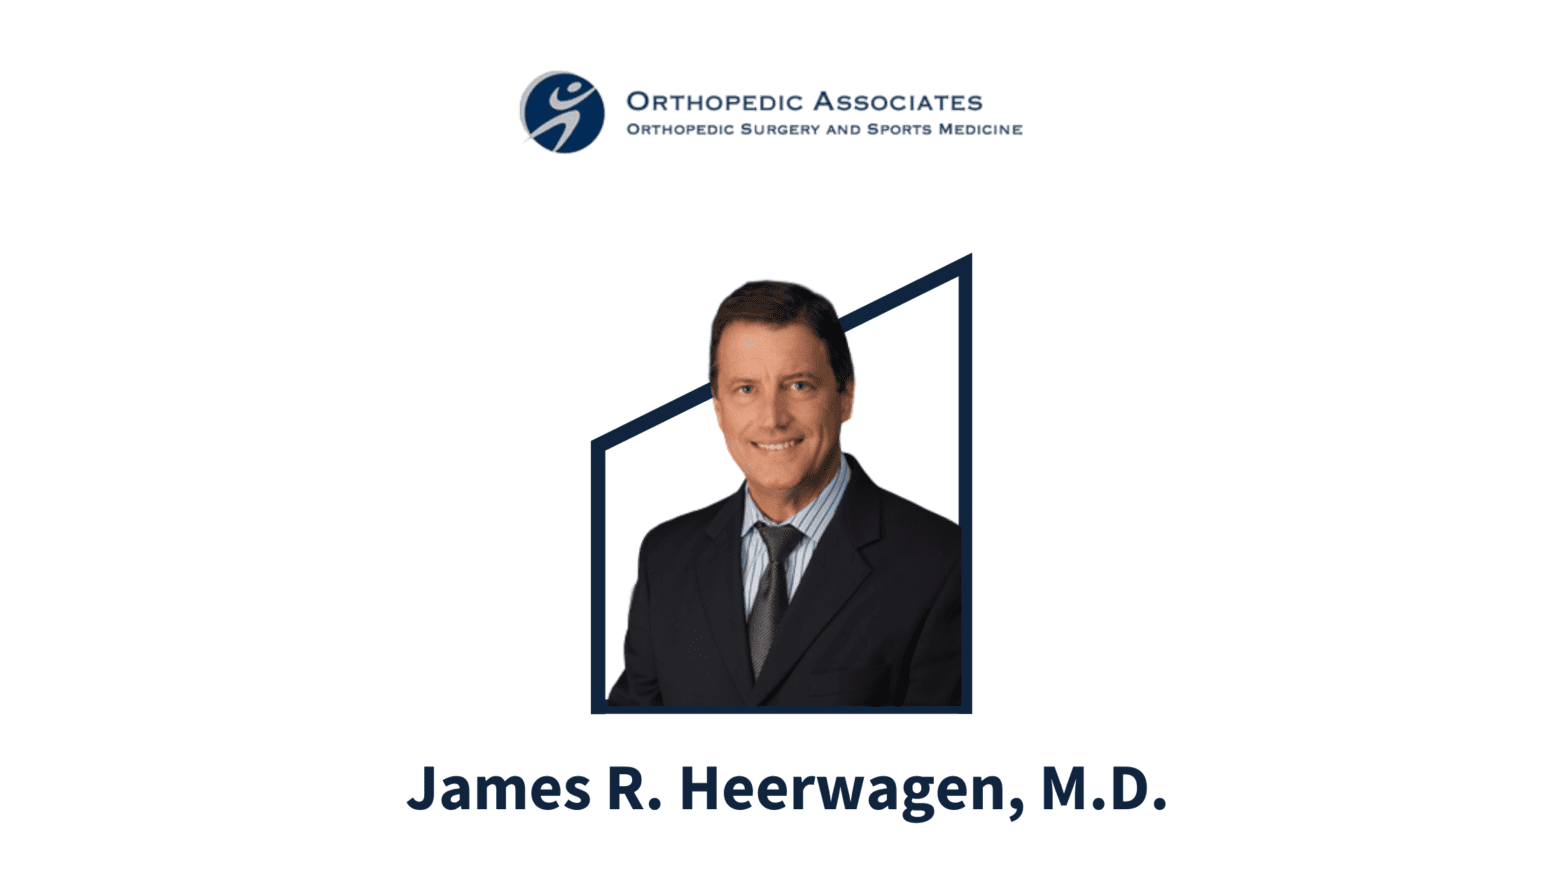 James R. Heerwagen, M.D. at Orthopedic Associates